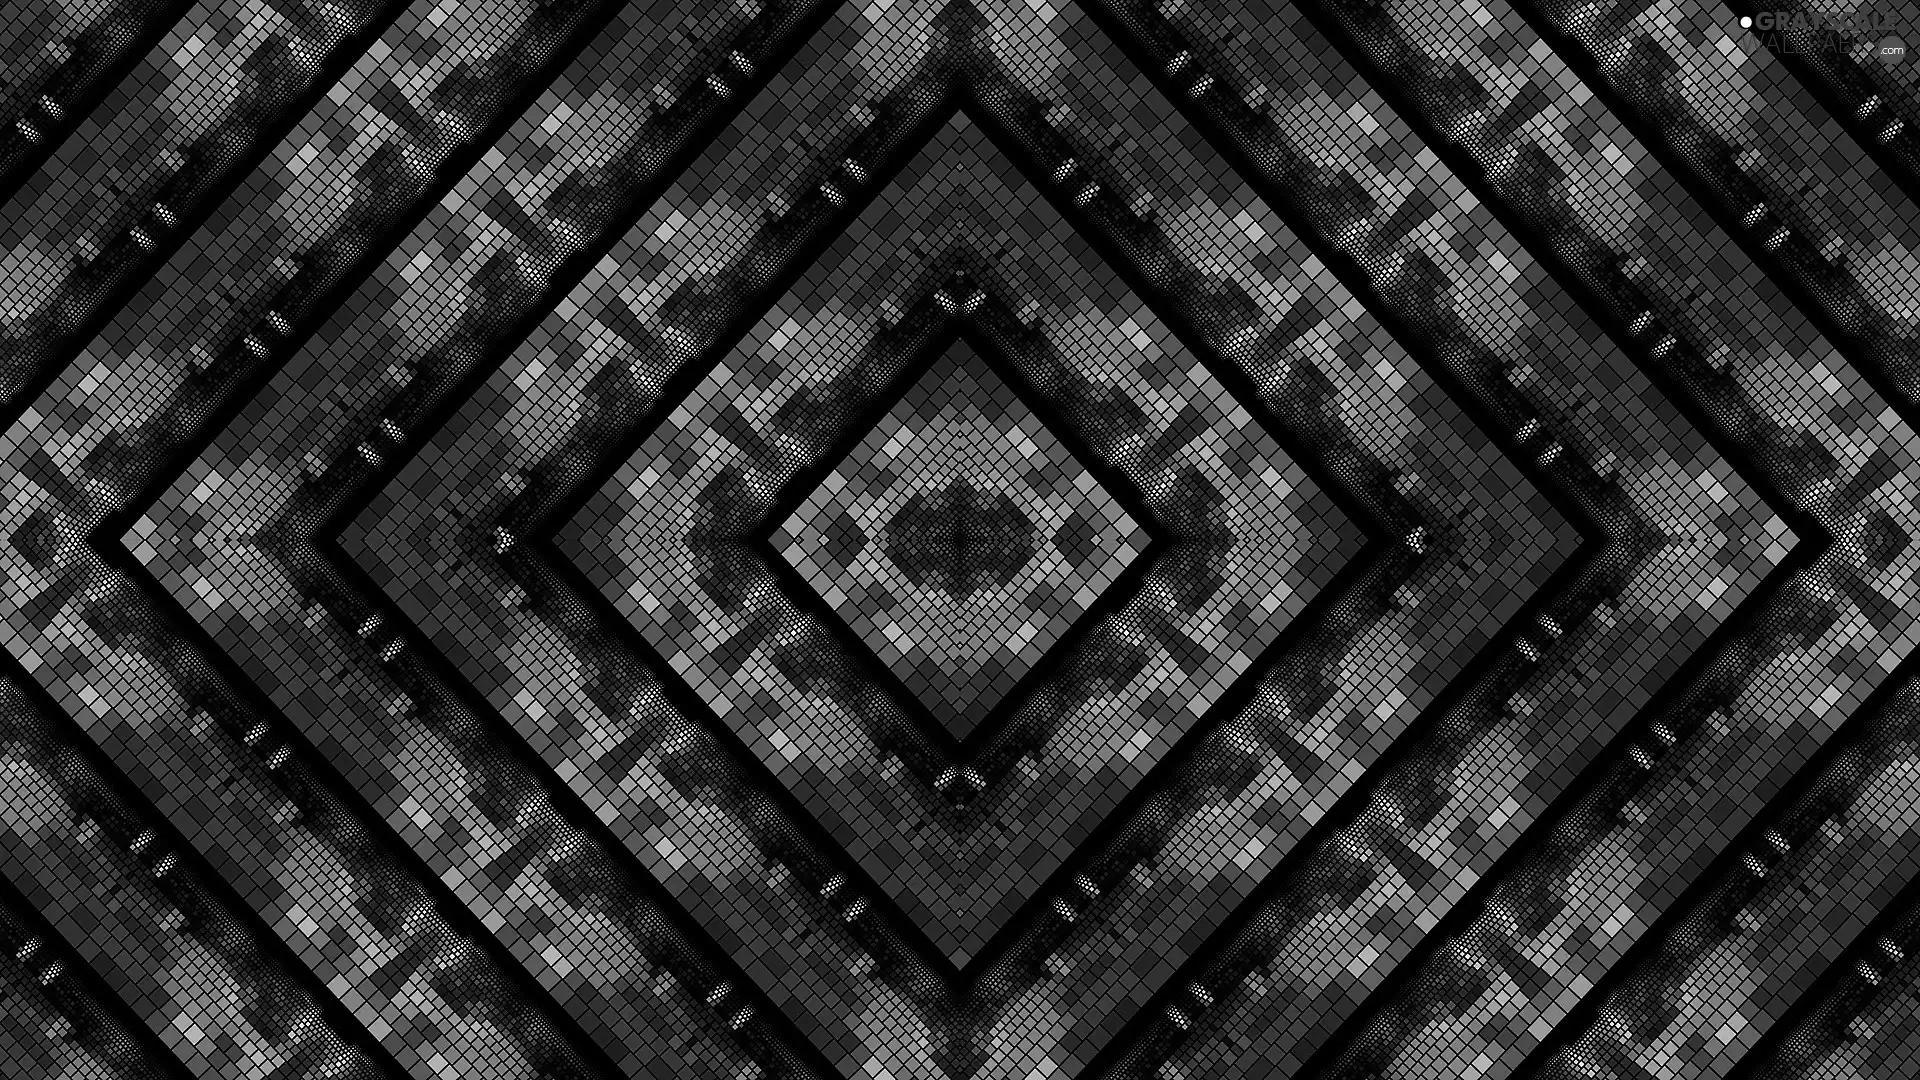 Kaleidoscope, Fraktal, square